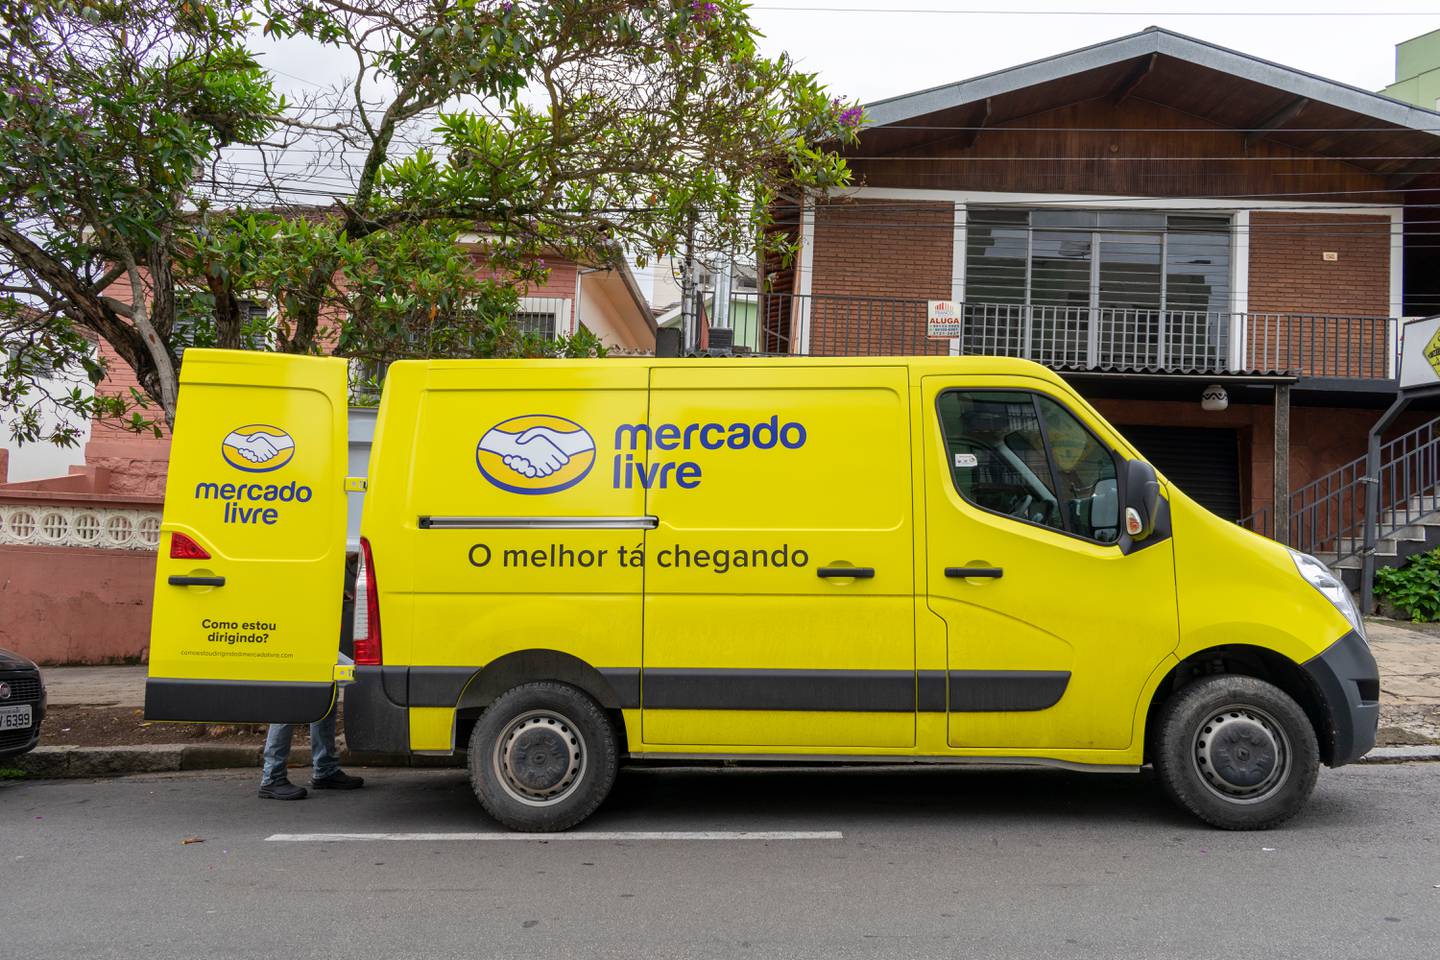 A Mercado Libre van makes deliveries. Shutterstock